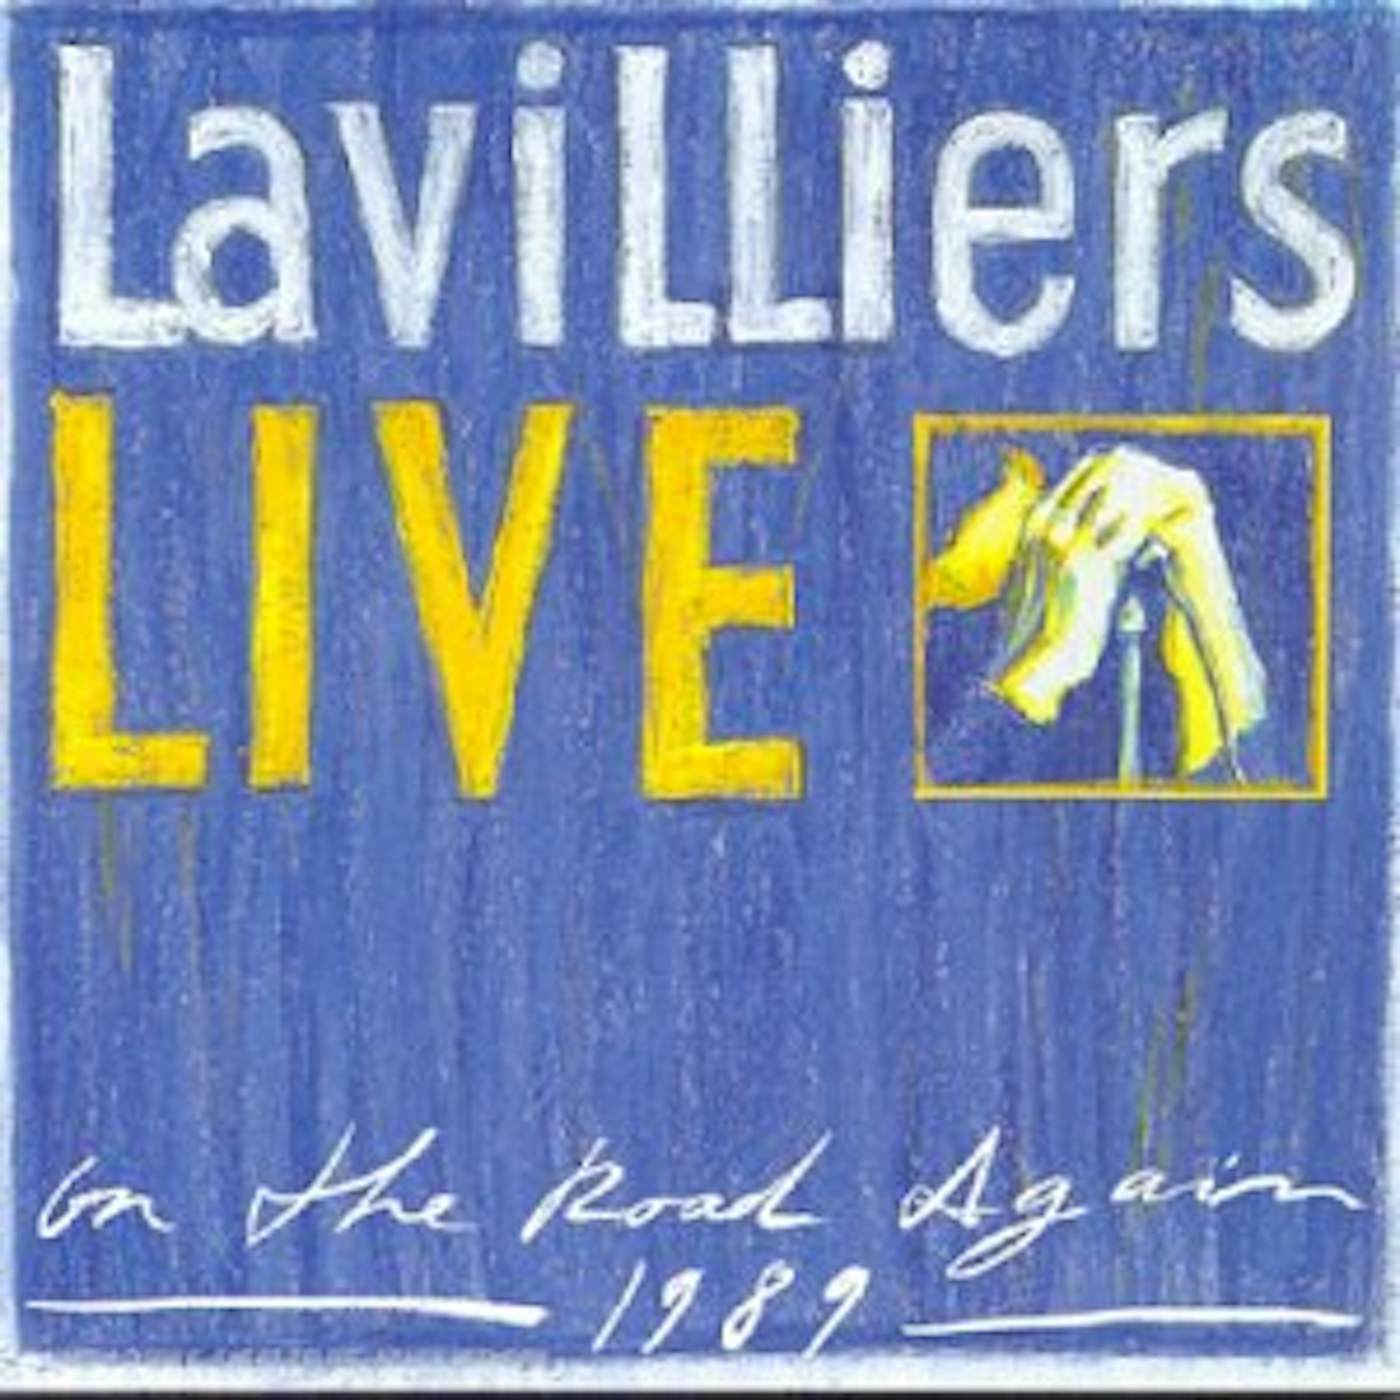 Bernard Lavilliers LIVE CD